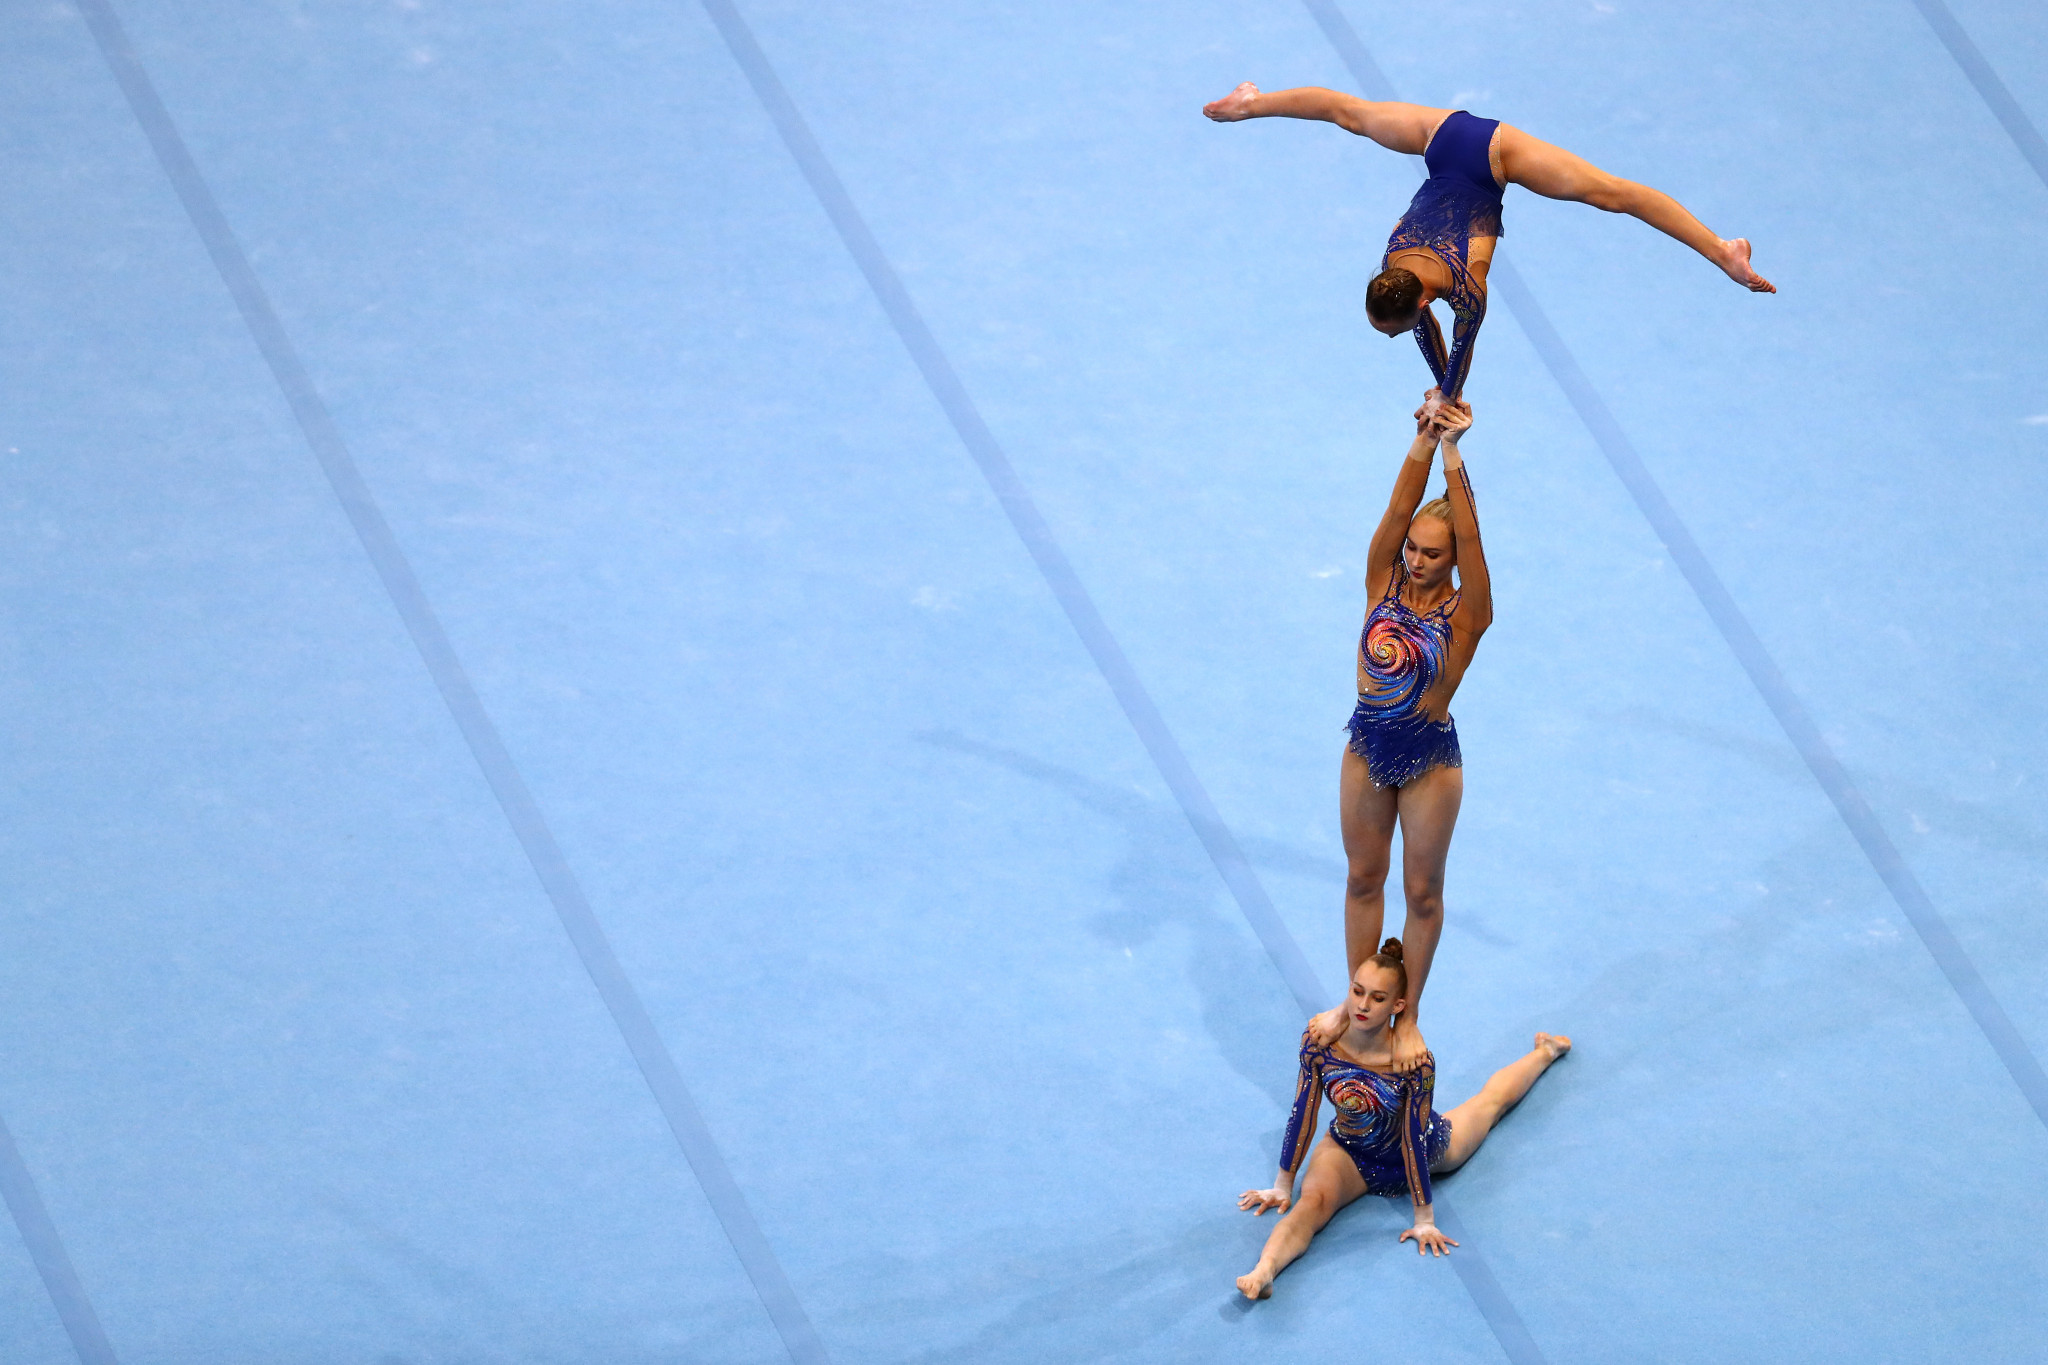 Acrobatic Gymnastics World Championships given new 2021 dates